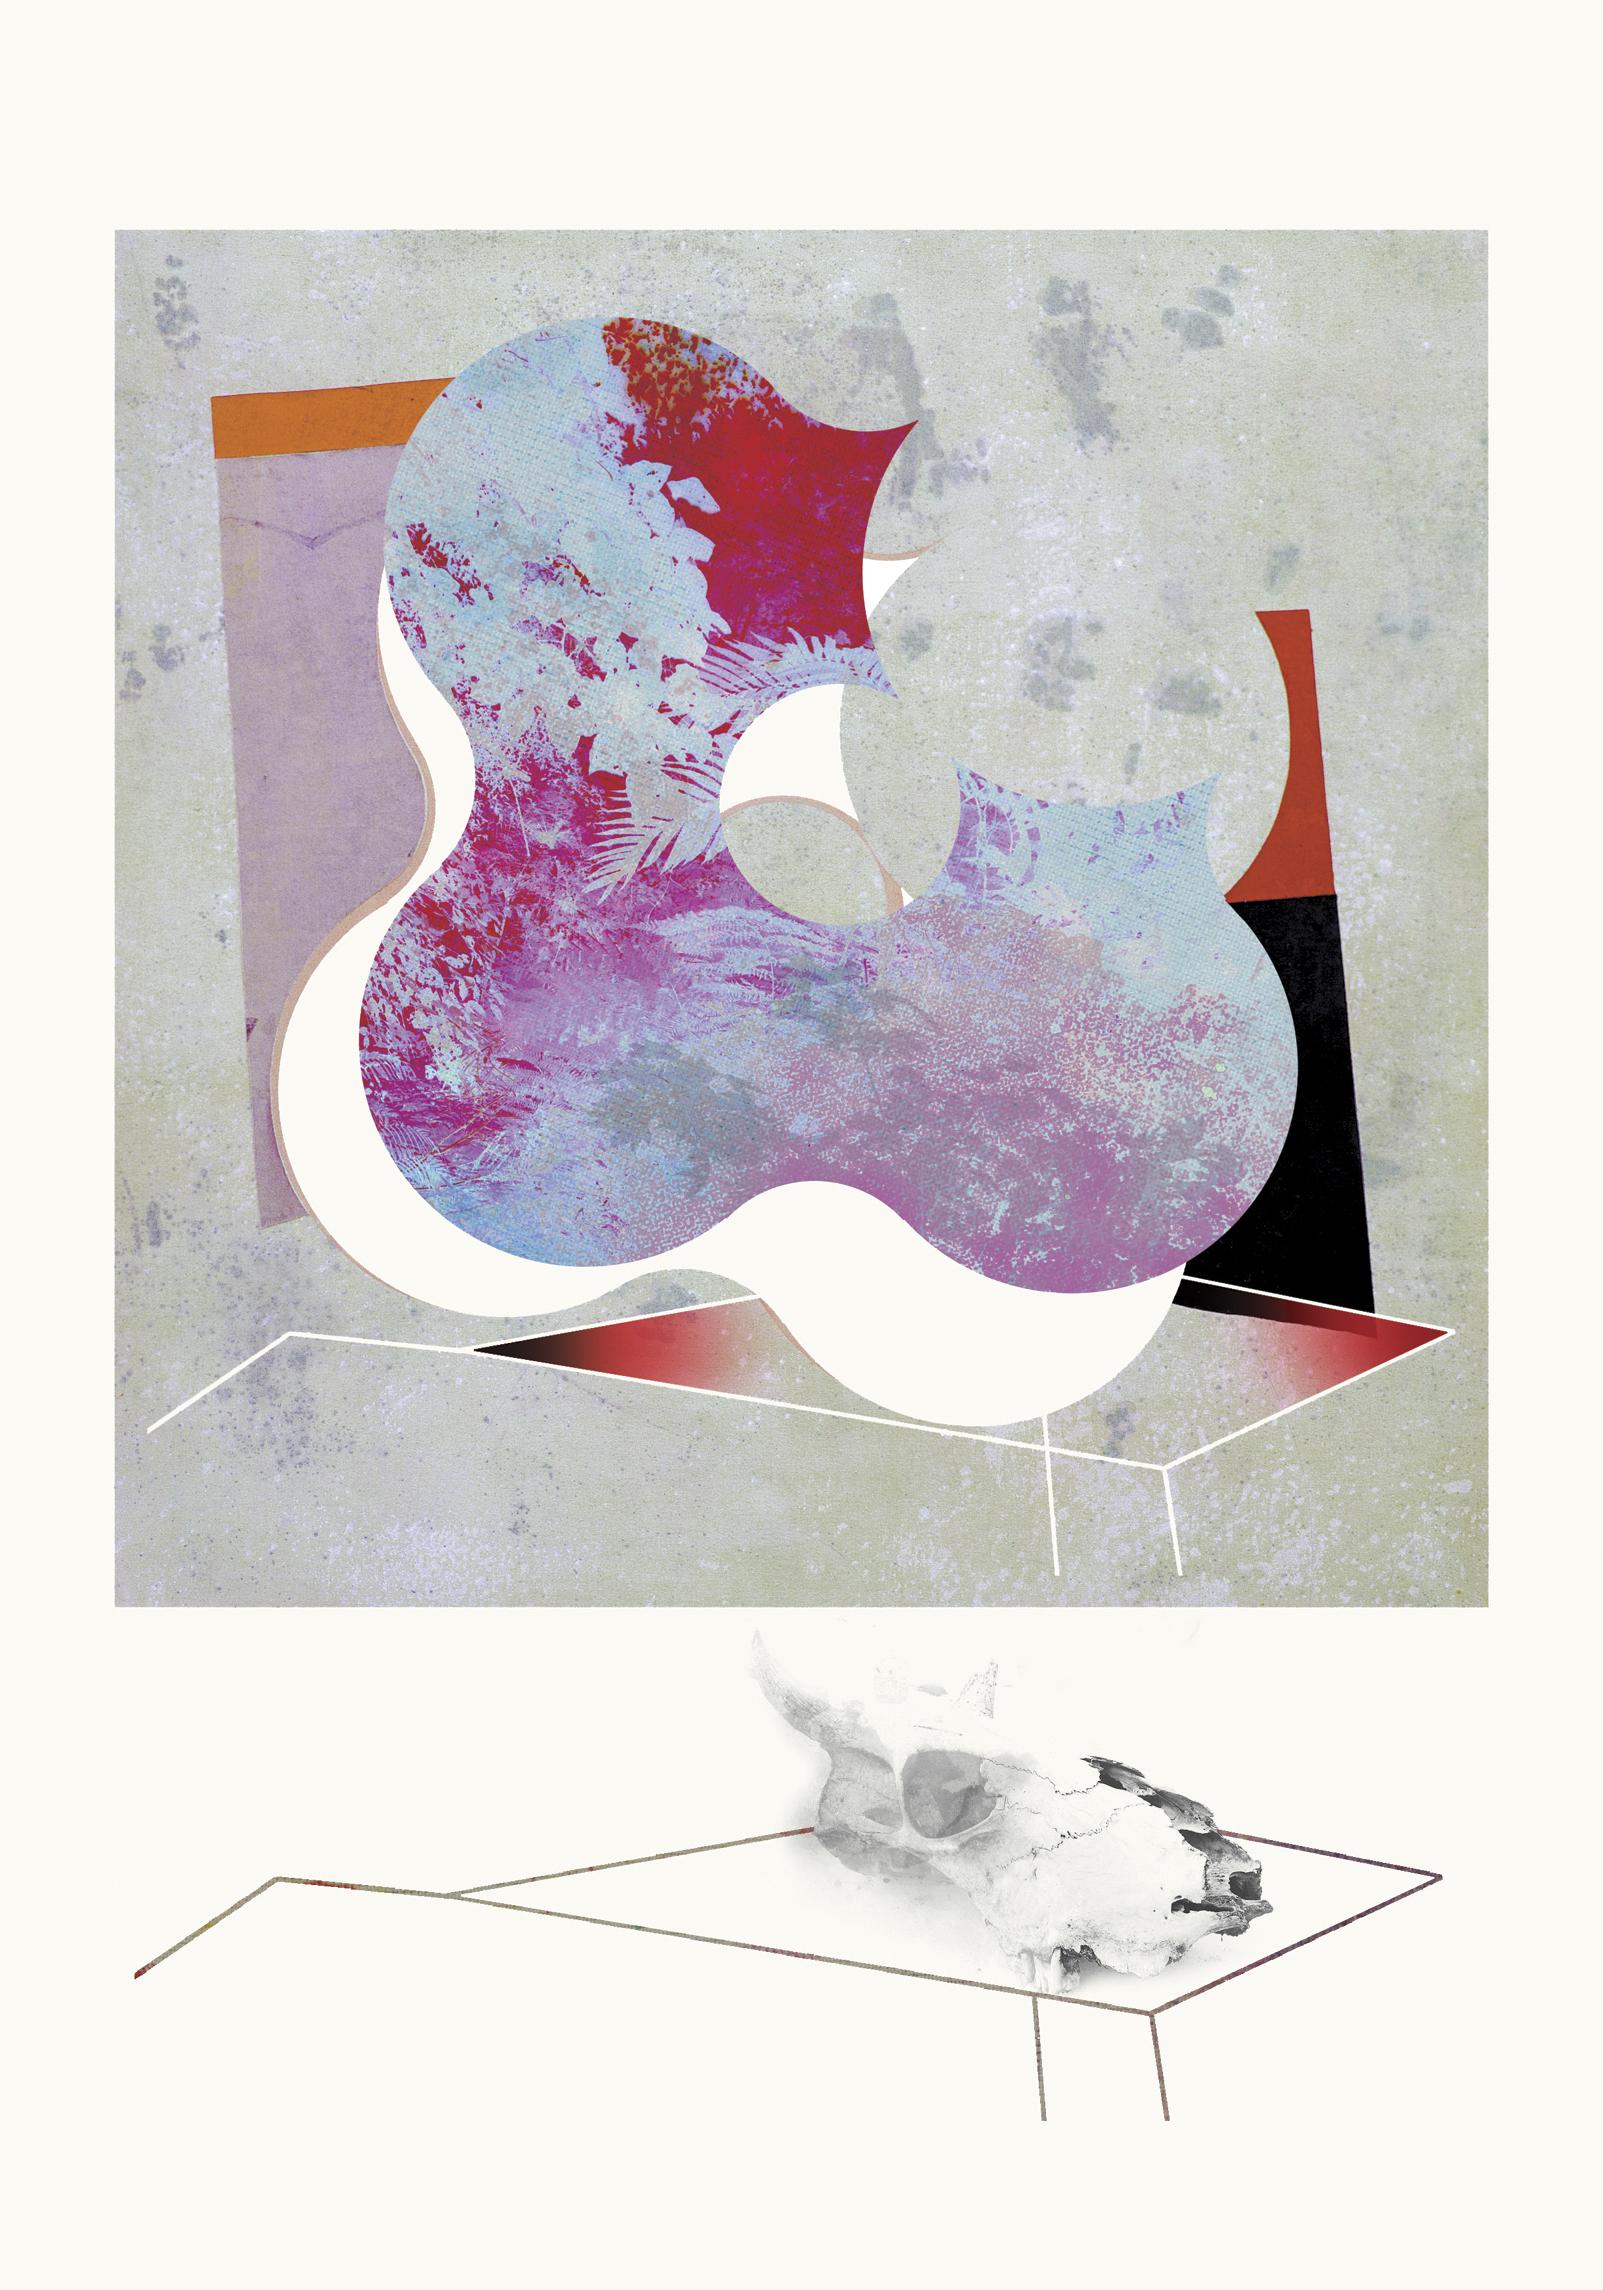 Francisco Nicolás Figurative Print -  M00ba9-Contemporary, Abstract, Minimalism, Modern, Expressionist, Surrealist